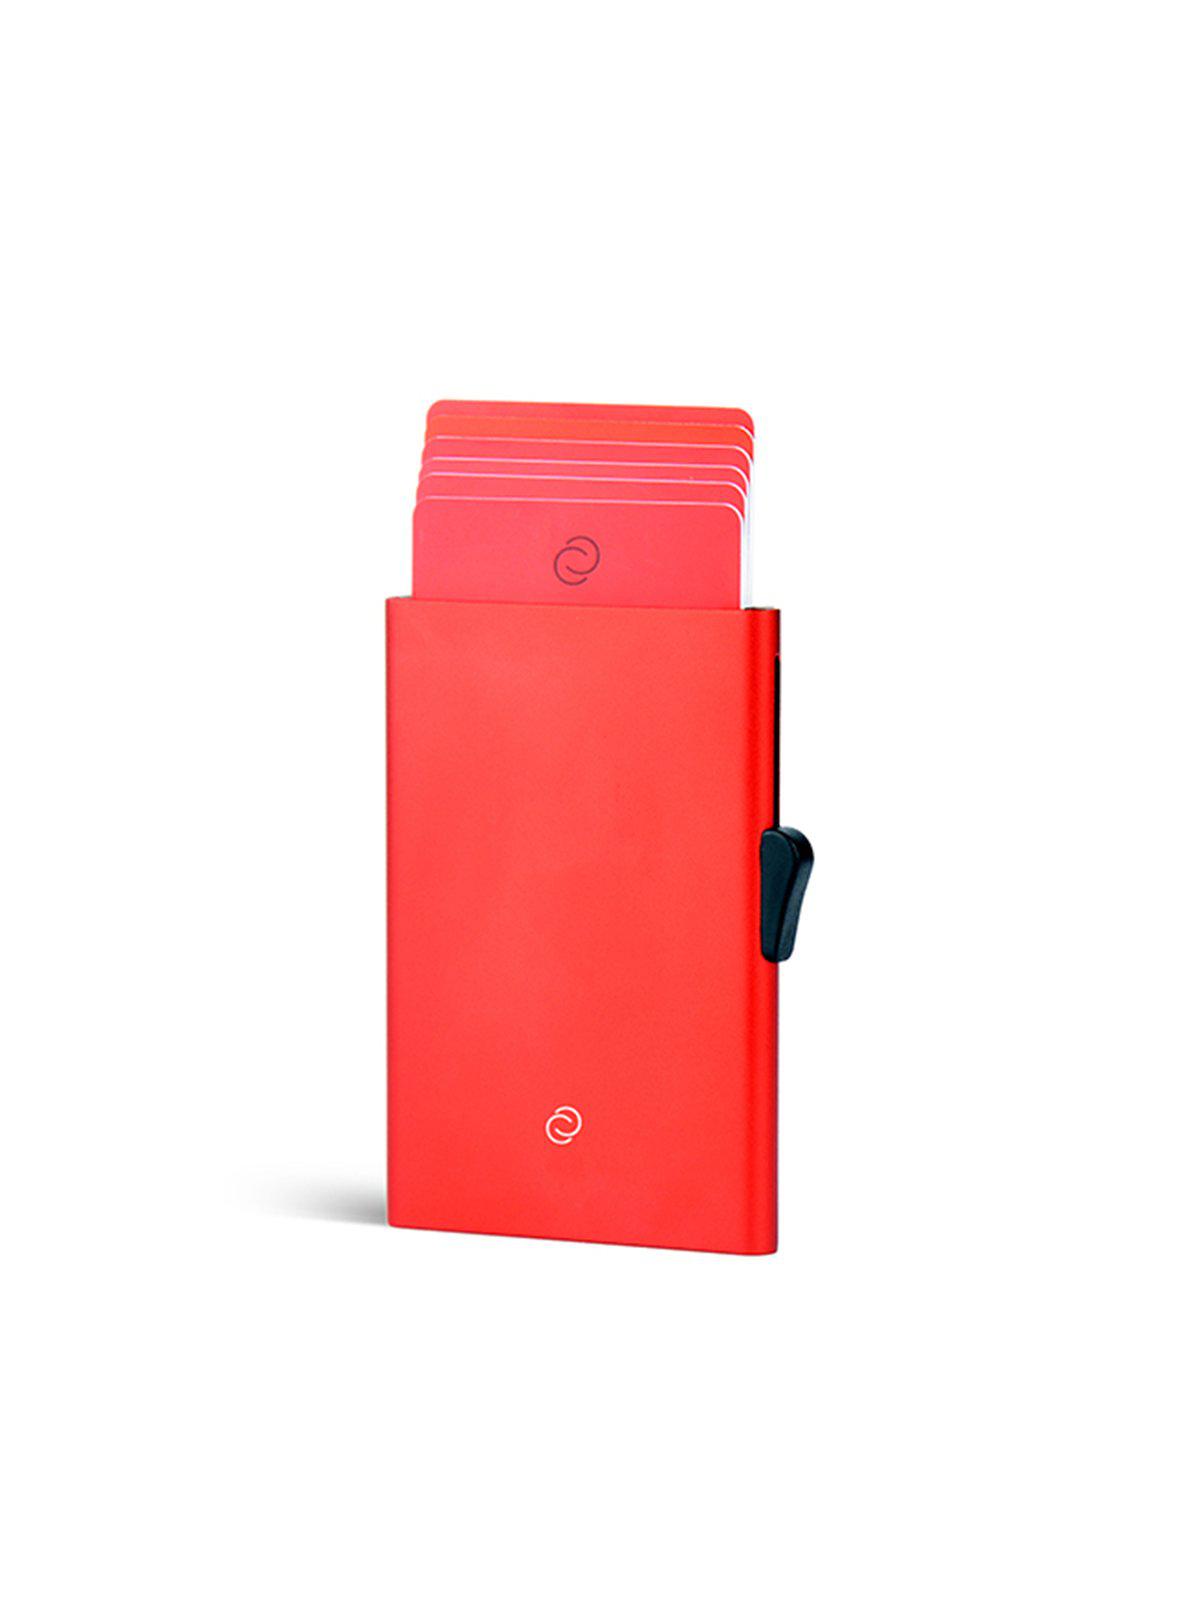 C-Secure Aluminium RFID Cardholder Red - MORE by Morello Indonesia